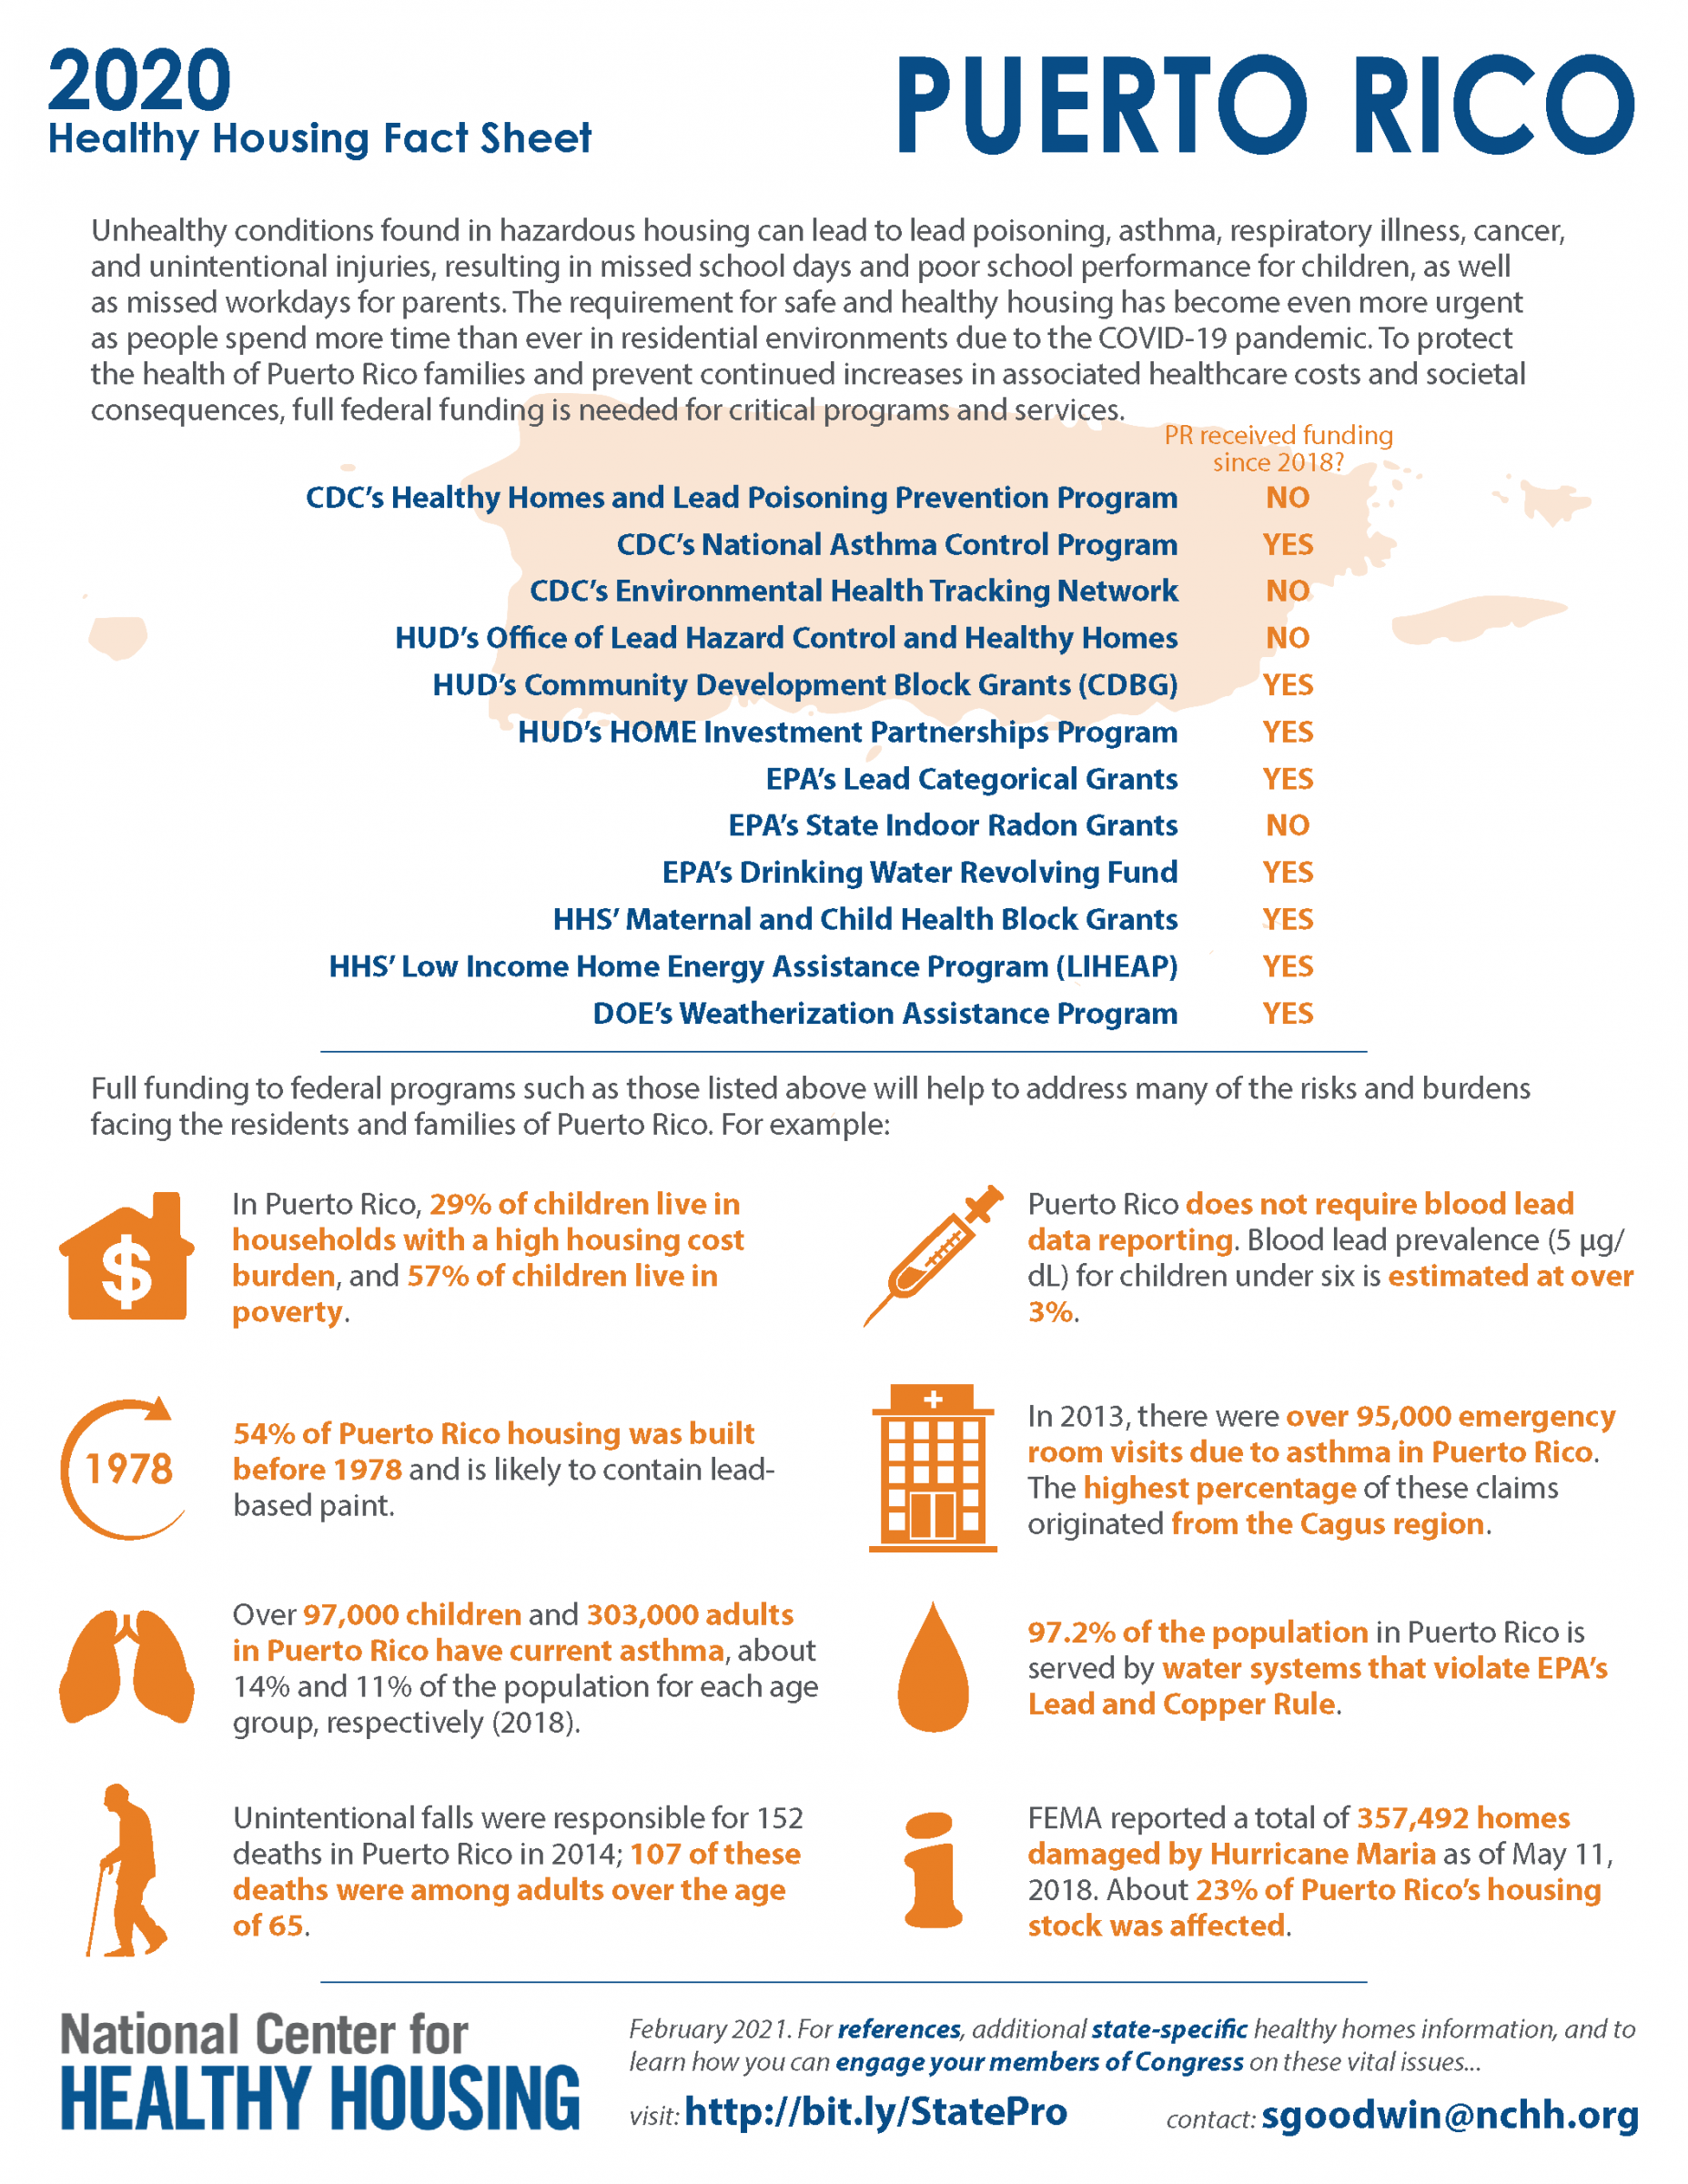 Healthy Housing Fact Sheet - Puerto Rico 2020